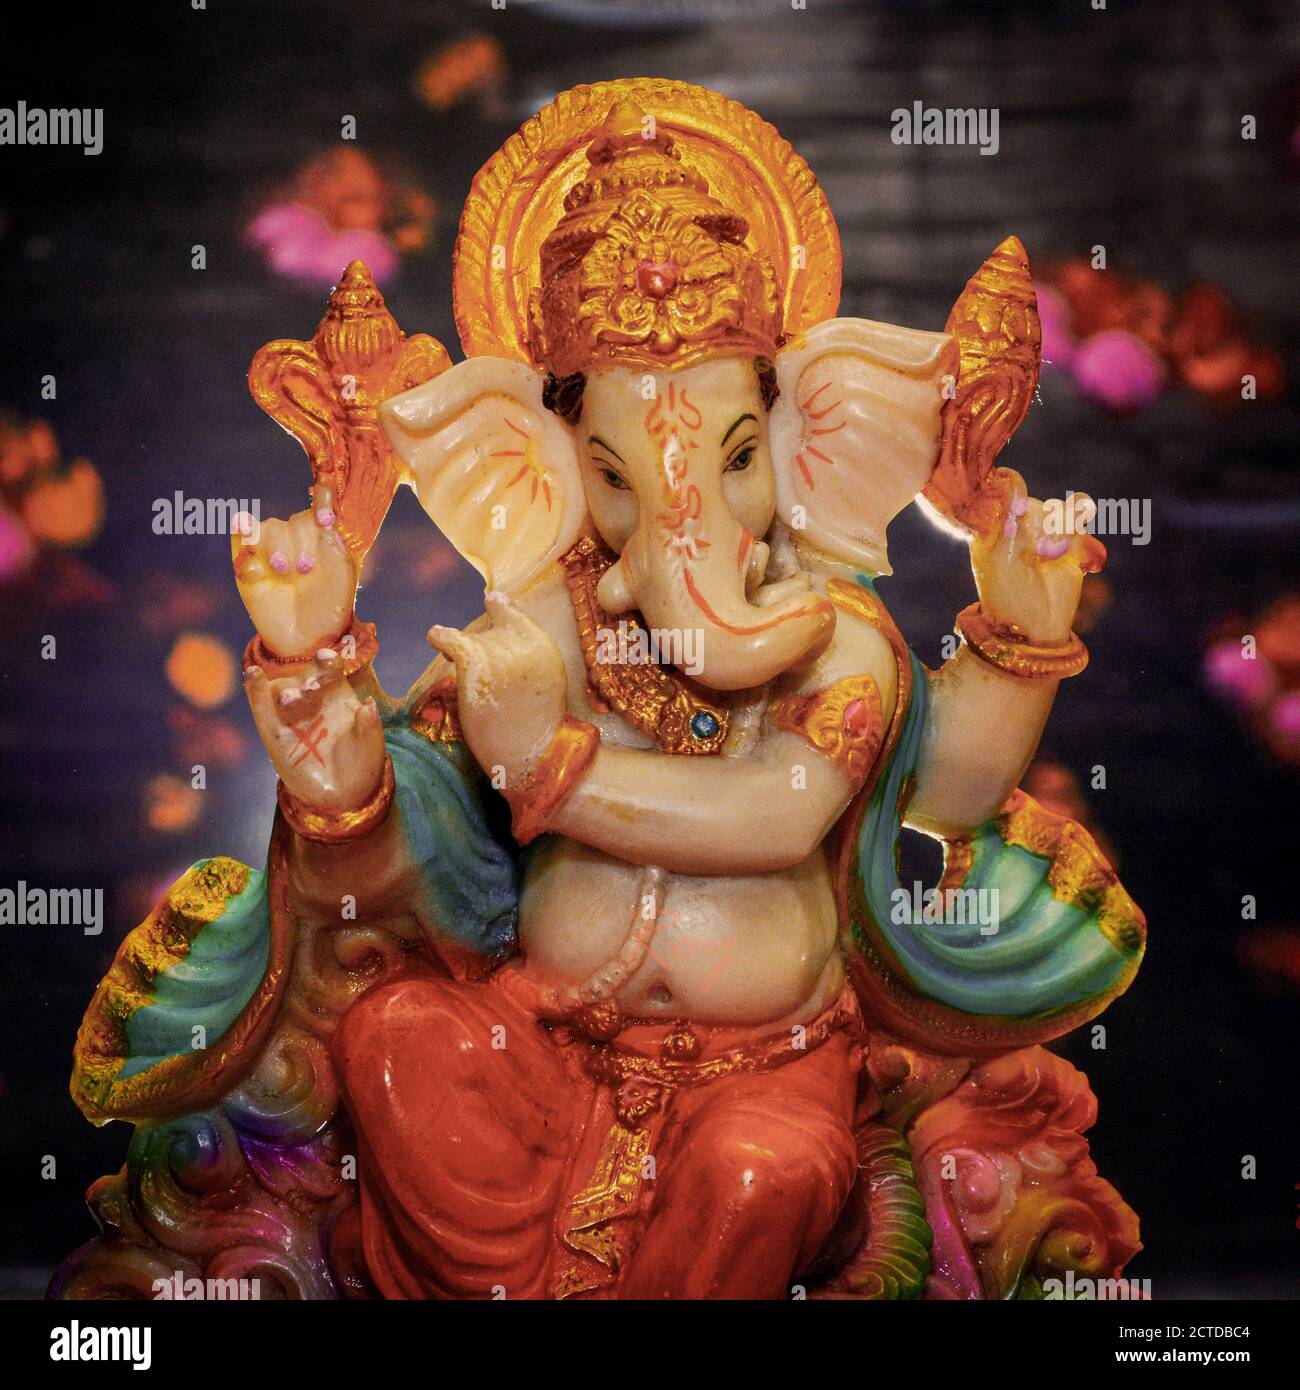 lord ganpati bappa Indian god Stock Photo - Alamy